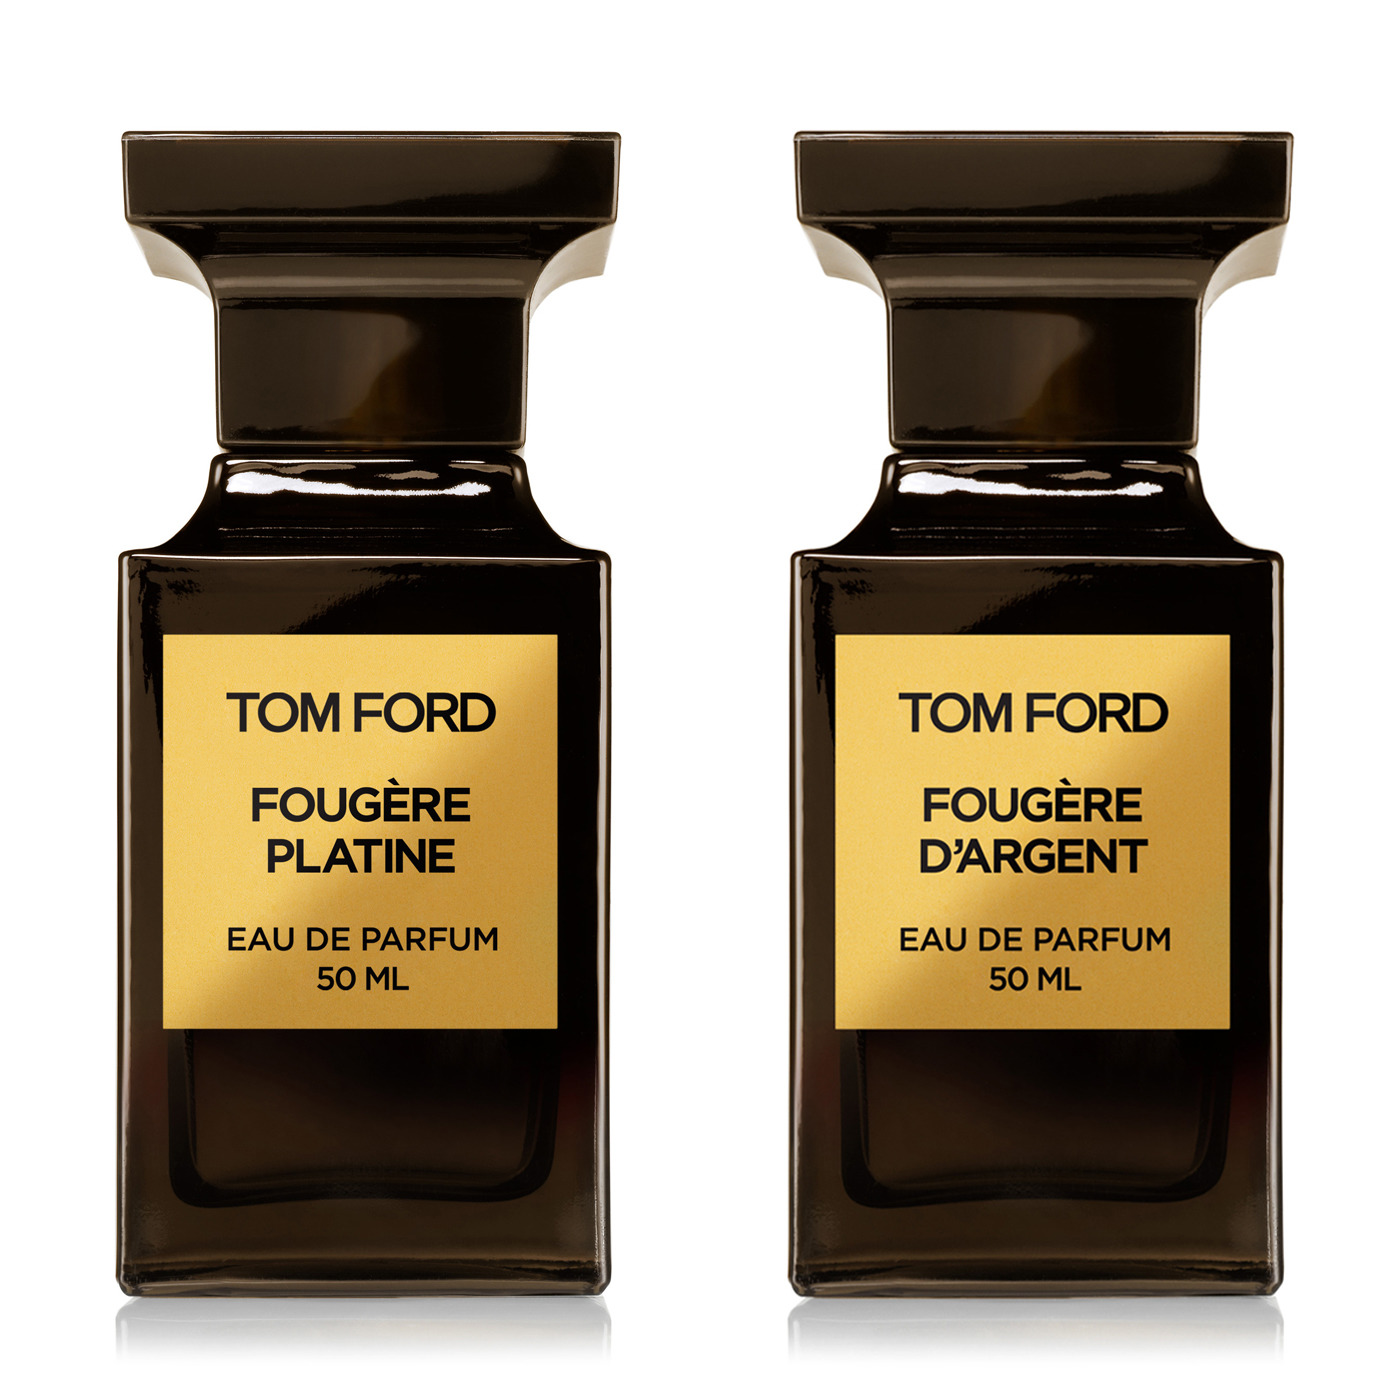 Tom ford купить мужские. Tom Ford Fougere d'argent. Tom Ford Fragrance. Линейка духов Tom Ford. Ароматизатор Tom Ford.